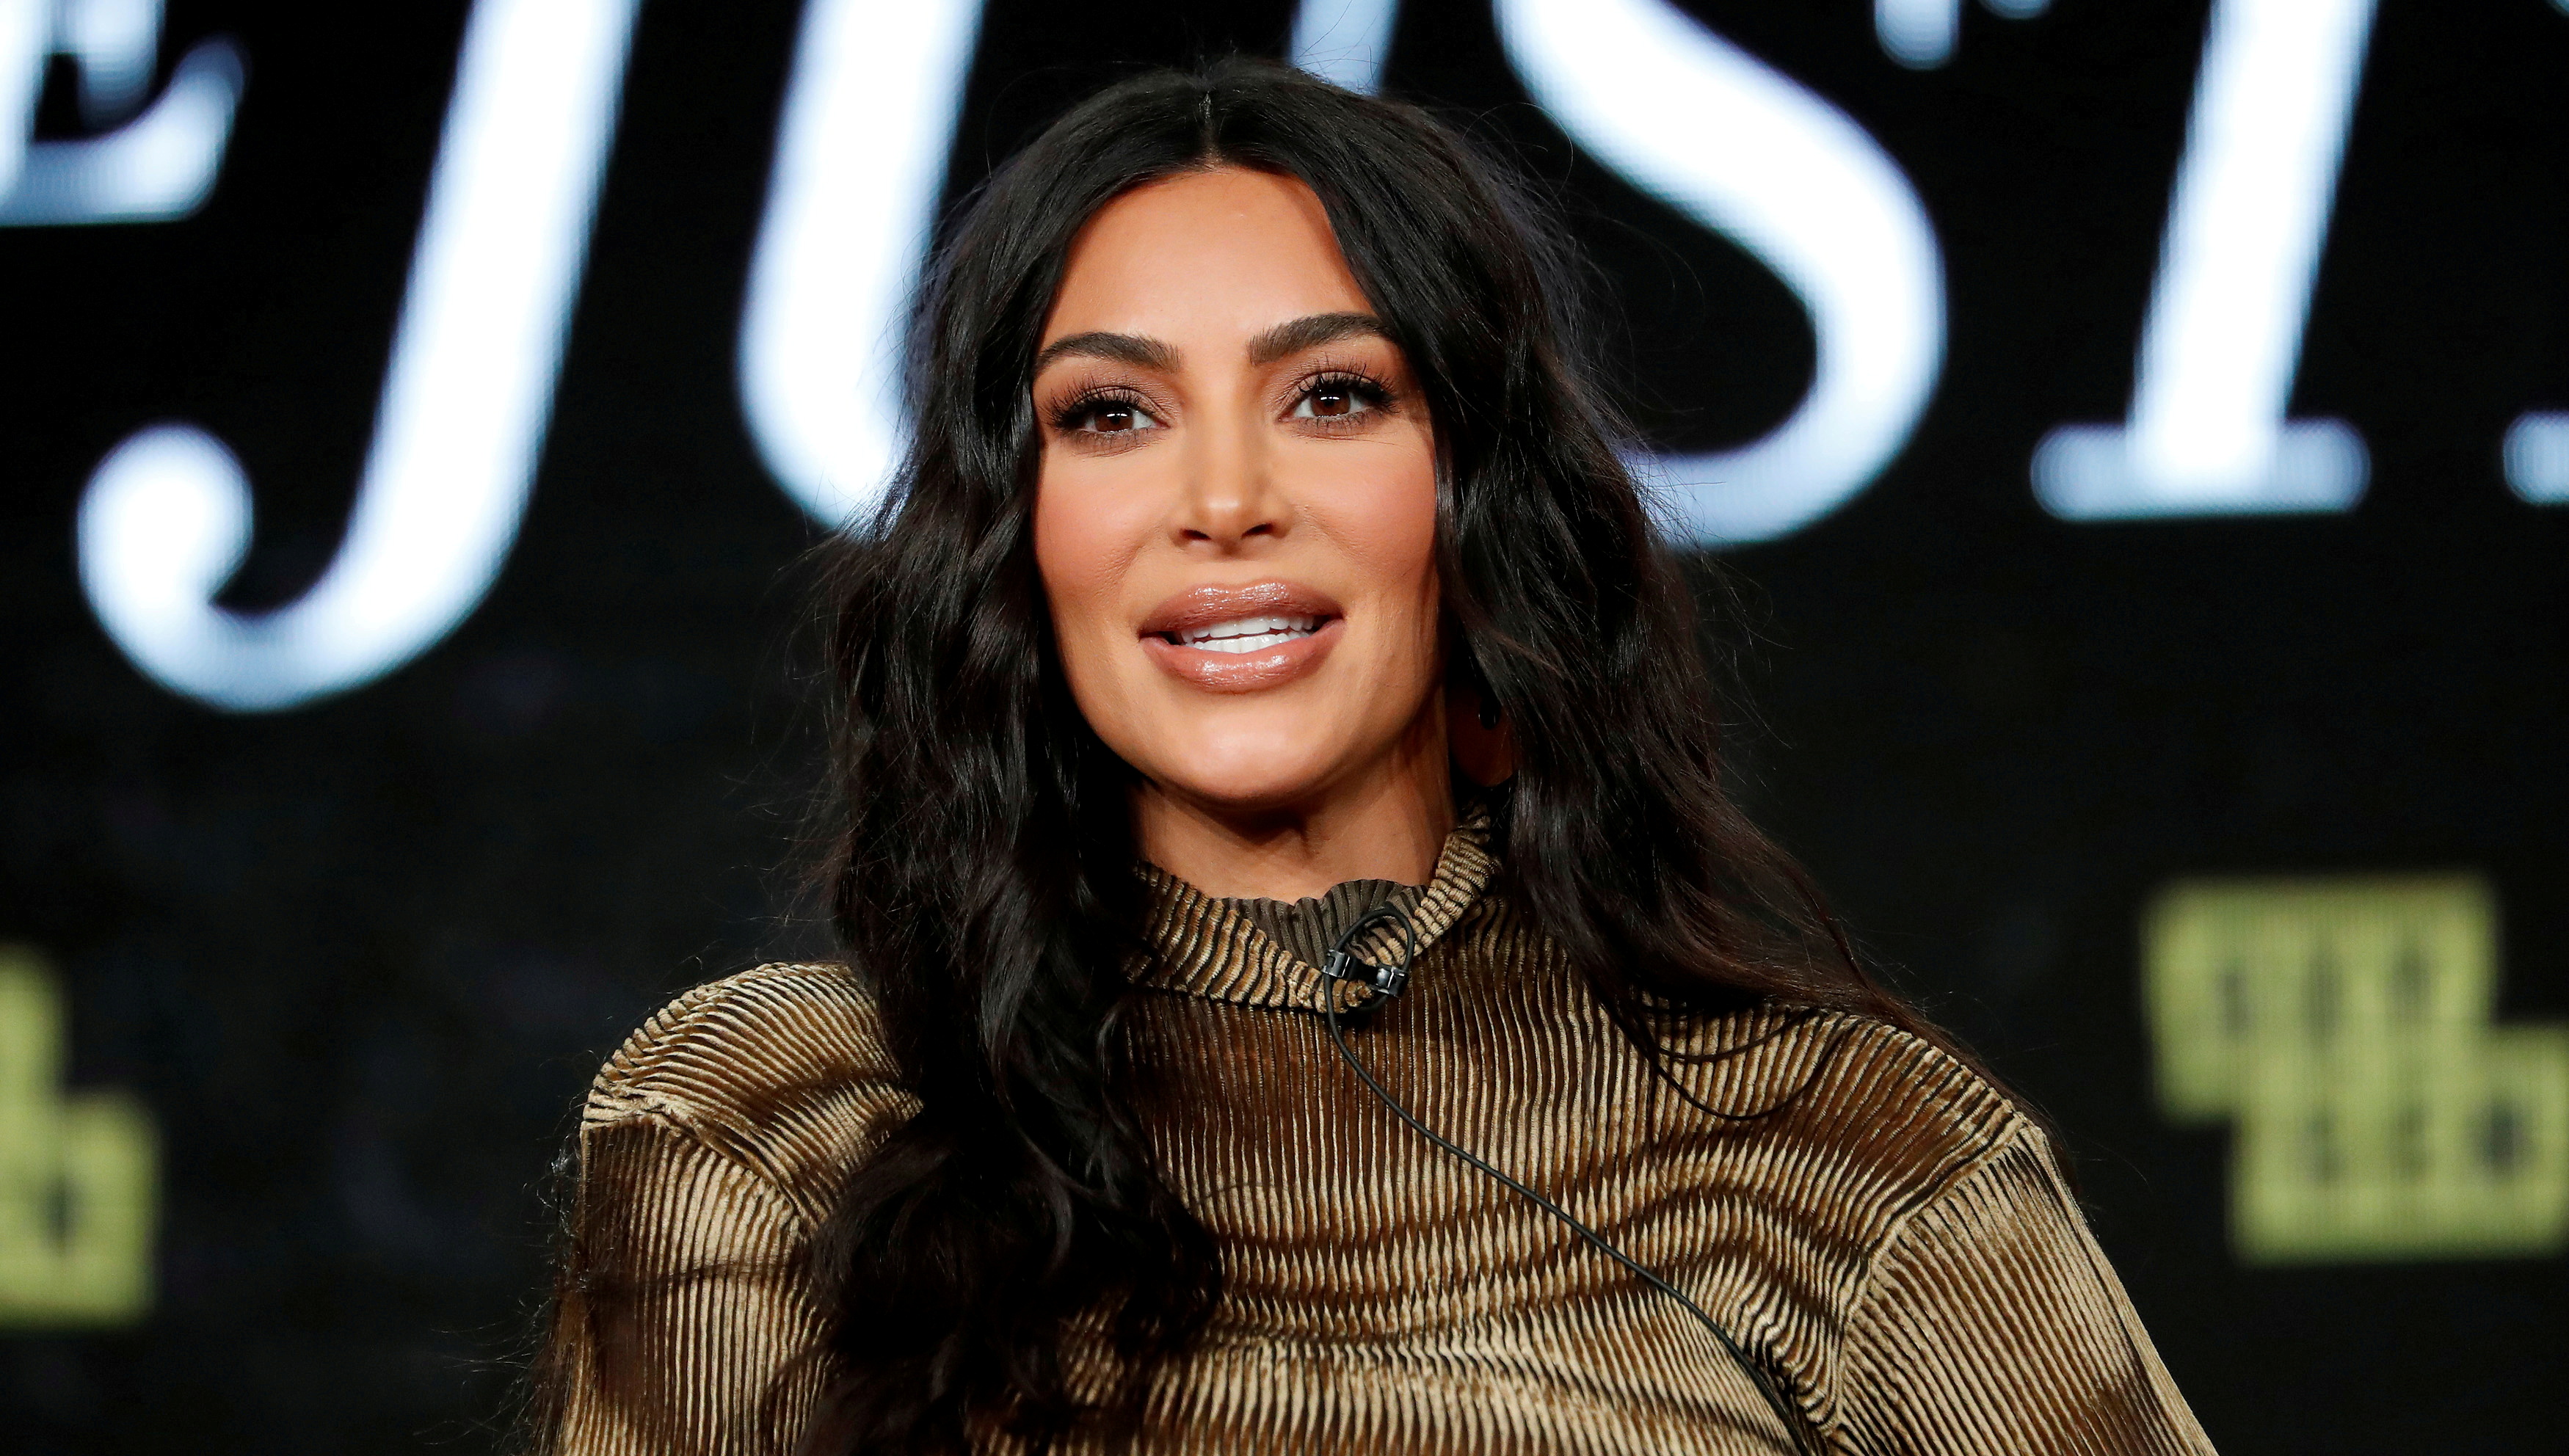 Is Kim Kardashian A Lawyer?